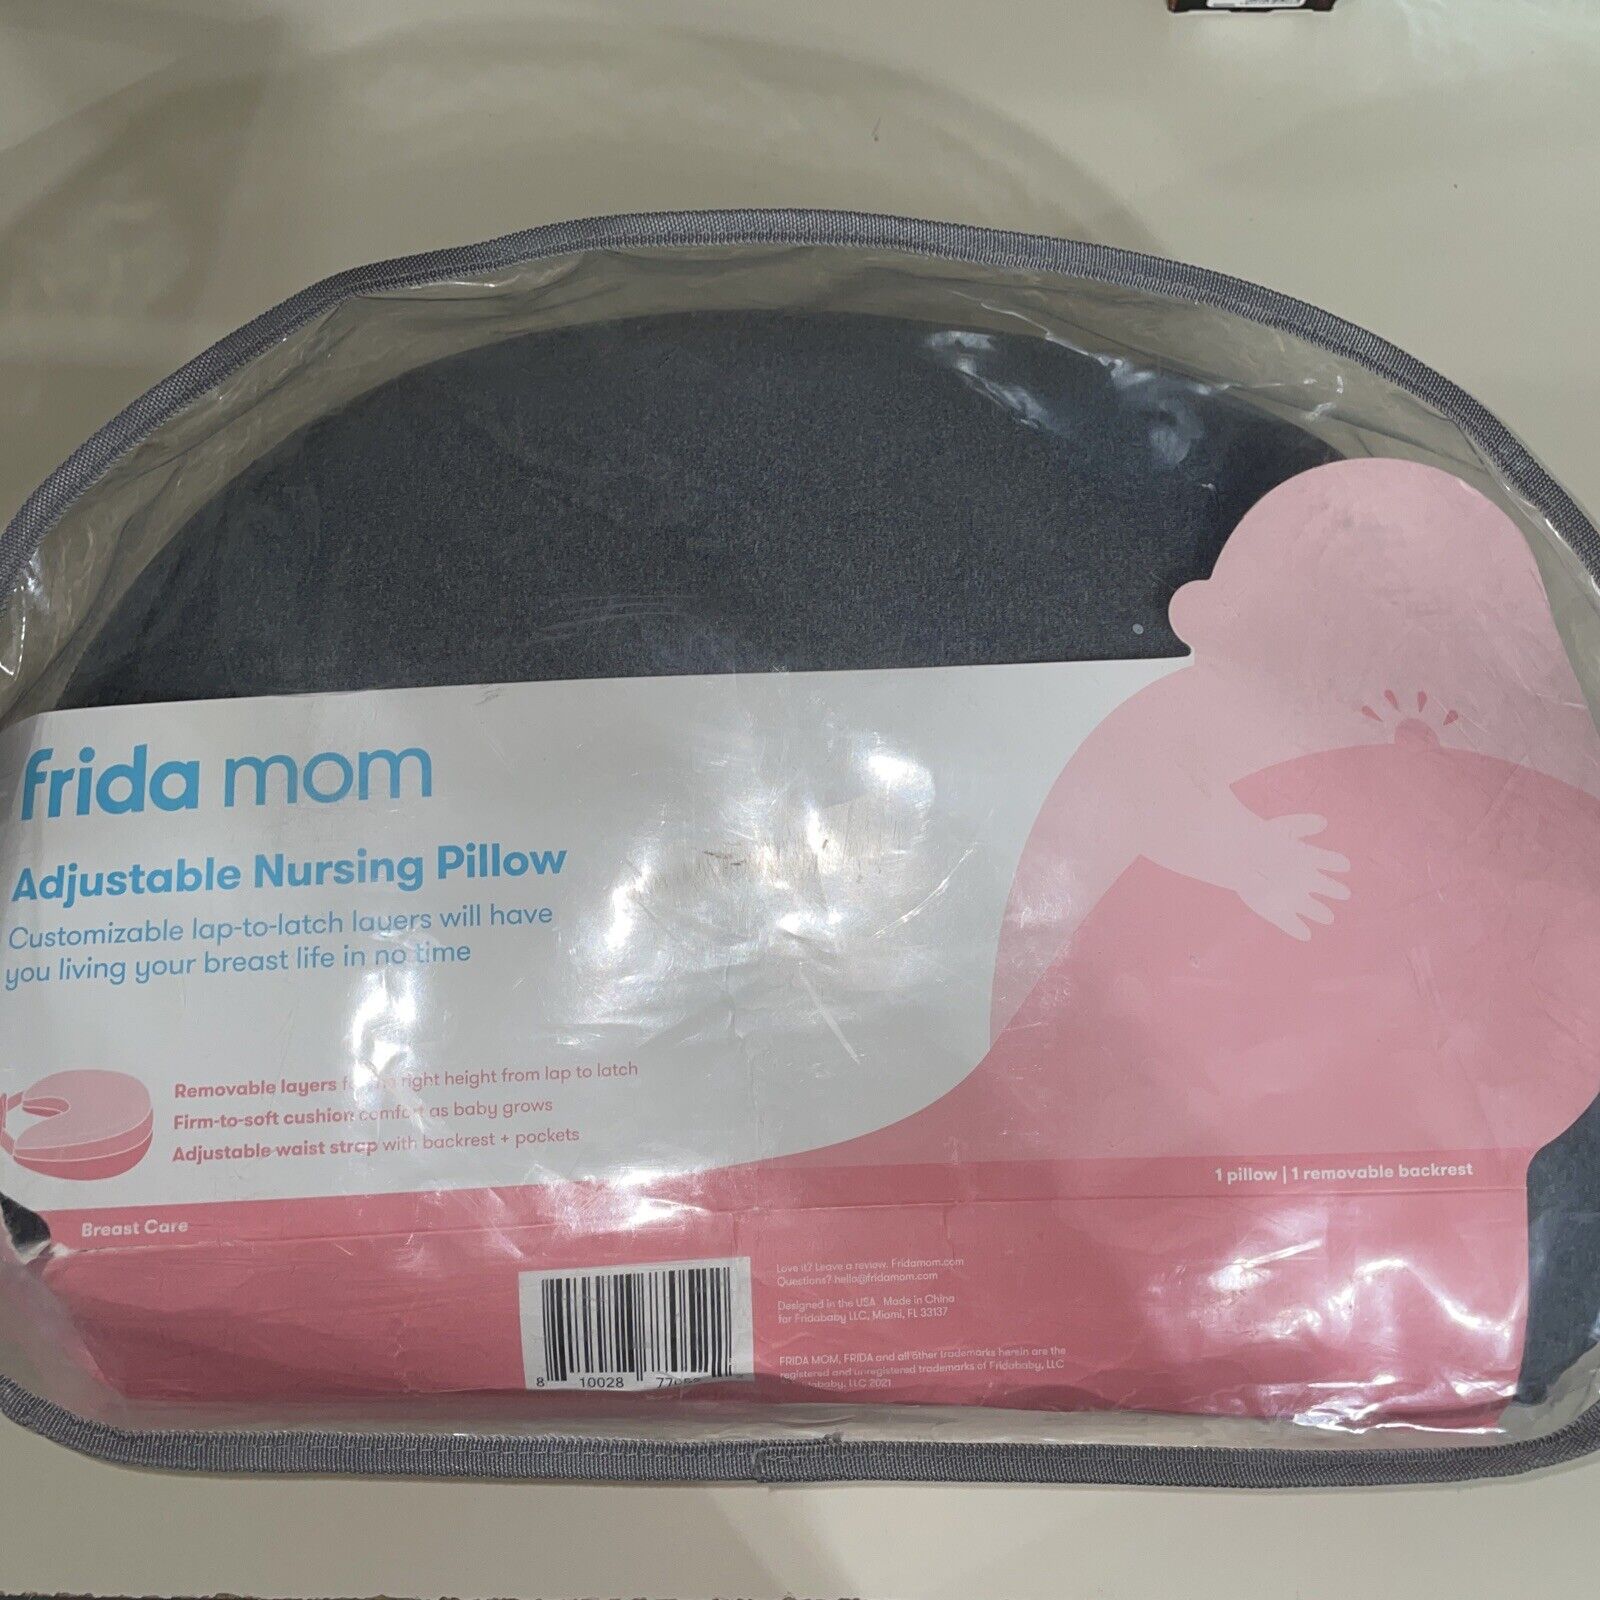 Frid@ Mom Adjustable Nursing Pillow - Customizable Breastfeeding Pillow-NEW  810028770522 | eBay